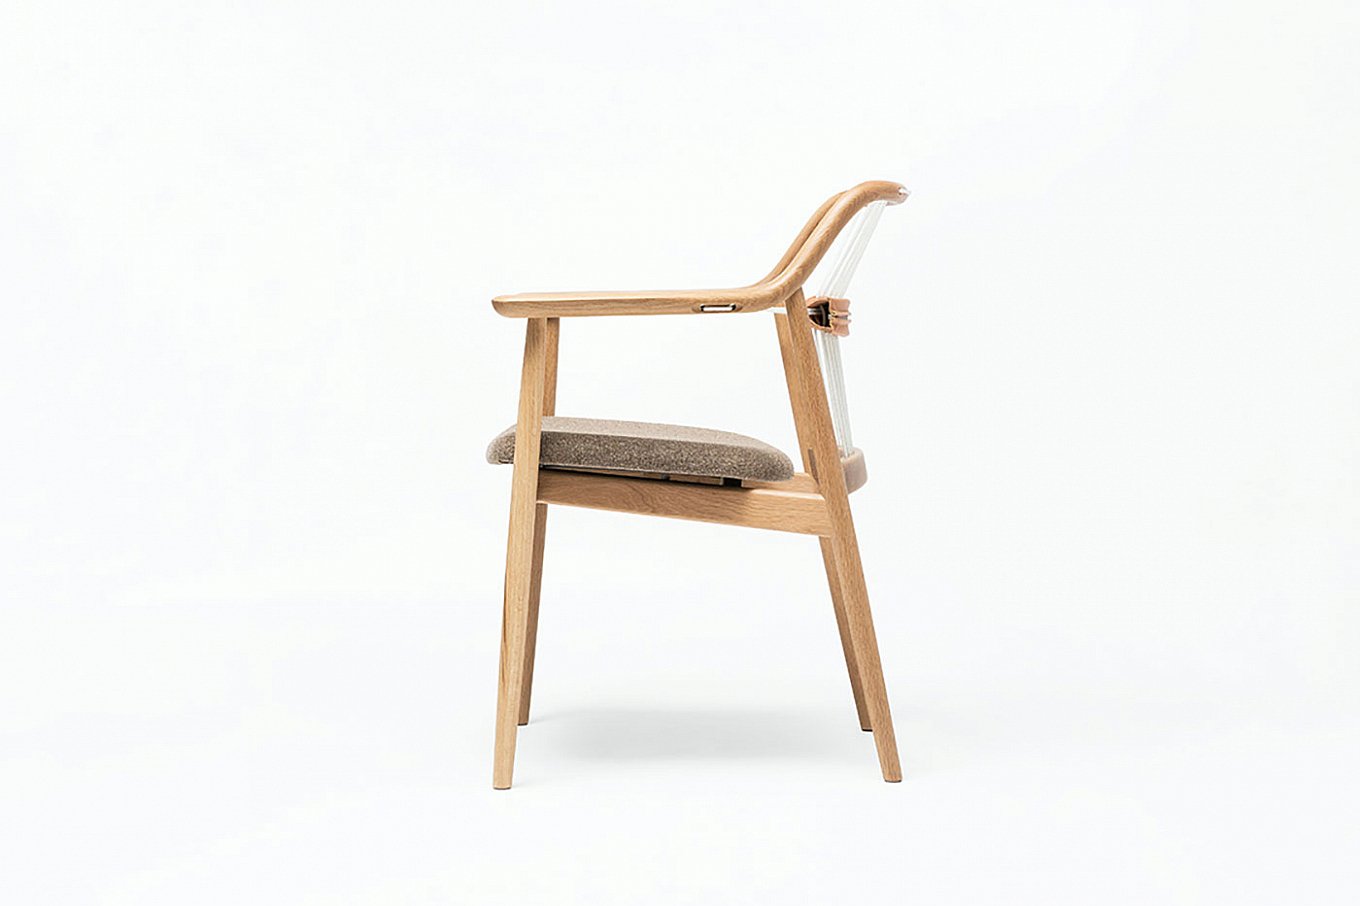 yc1-chair-by-mikiya-kobayashi-7